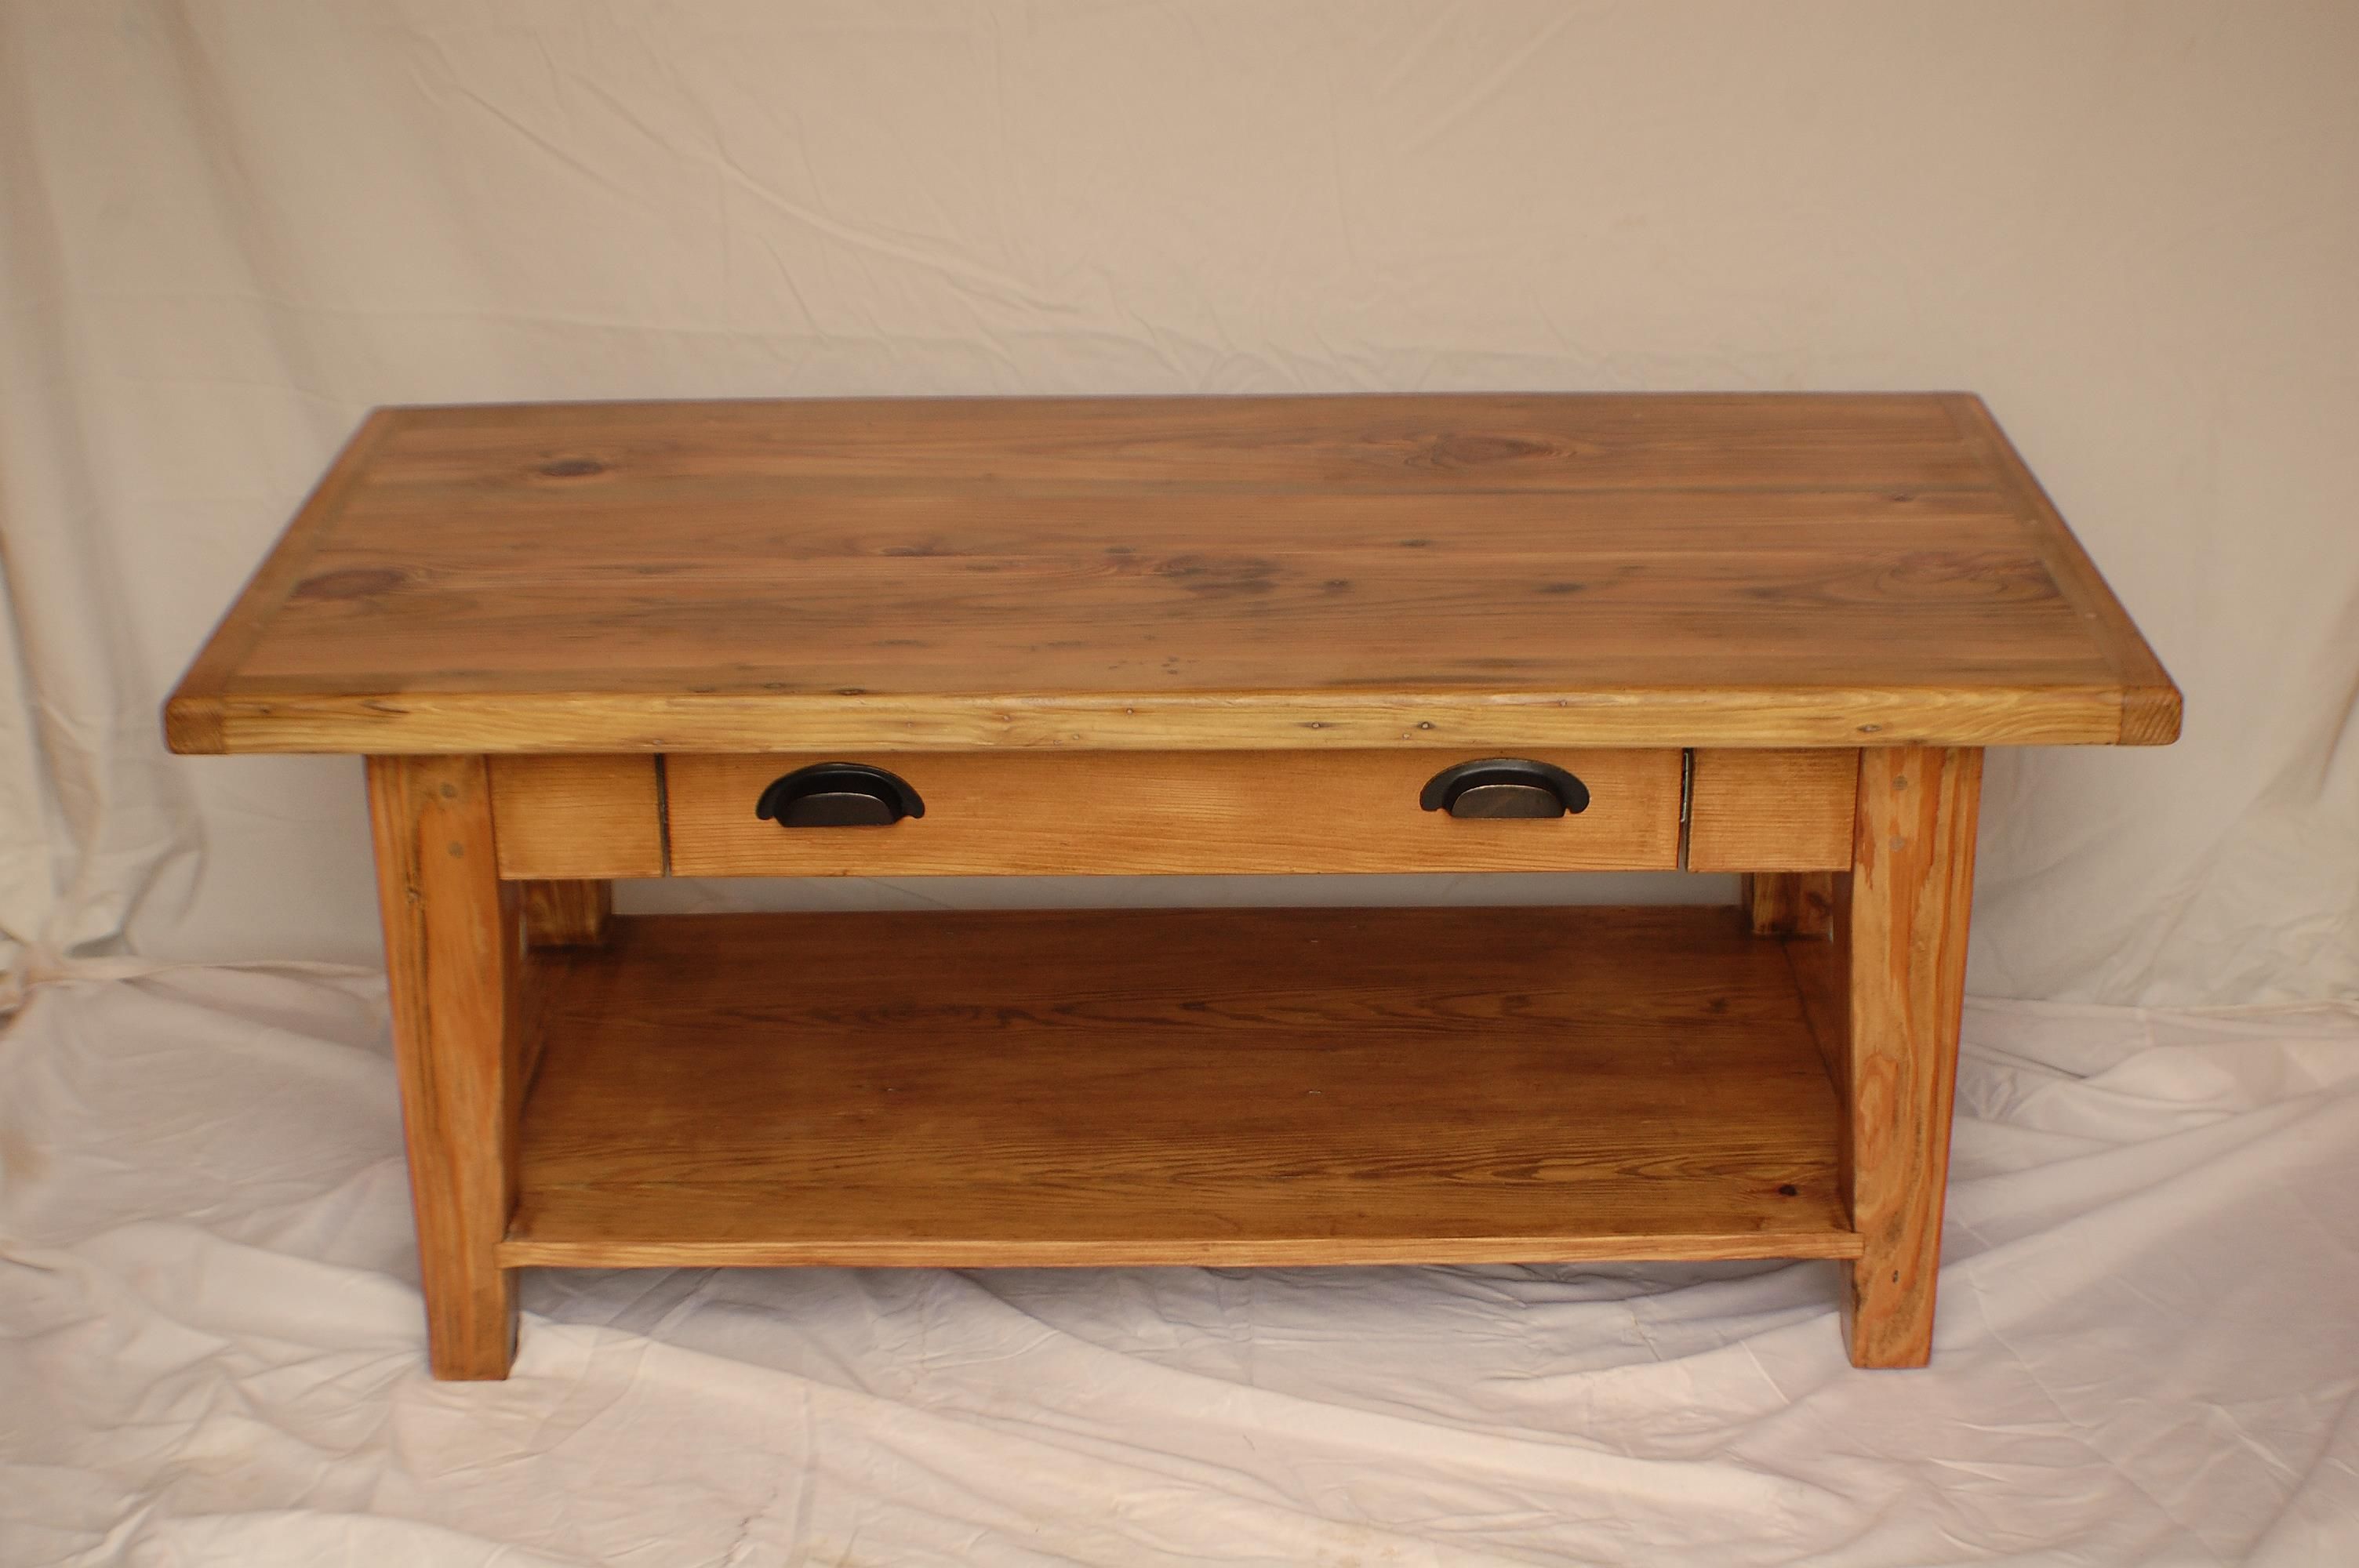 Buy Custom Reclaimed Heart Pine Coffee Table With Drawer And Shelf